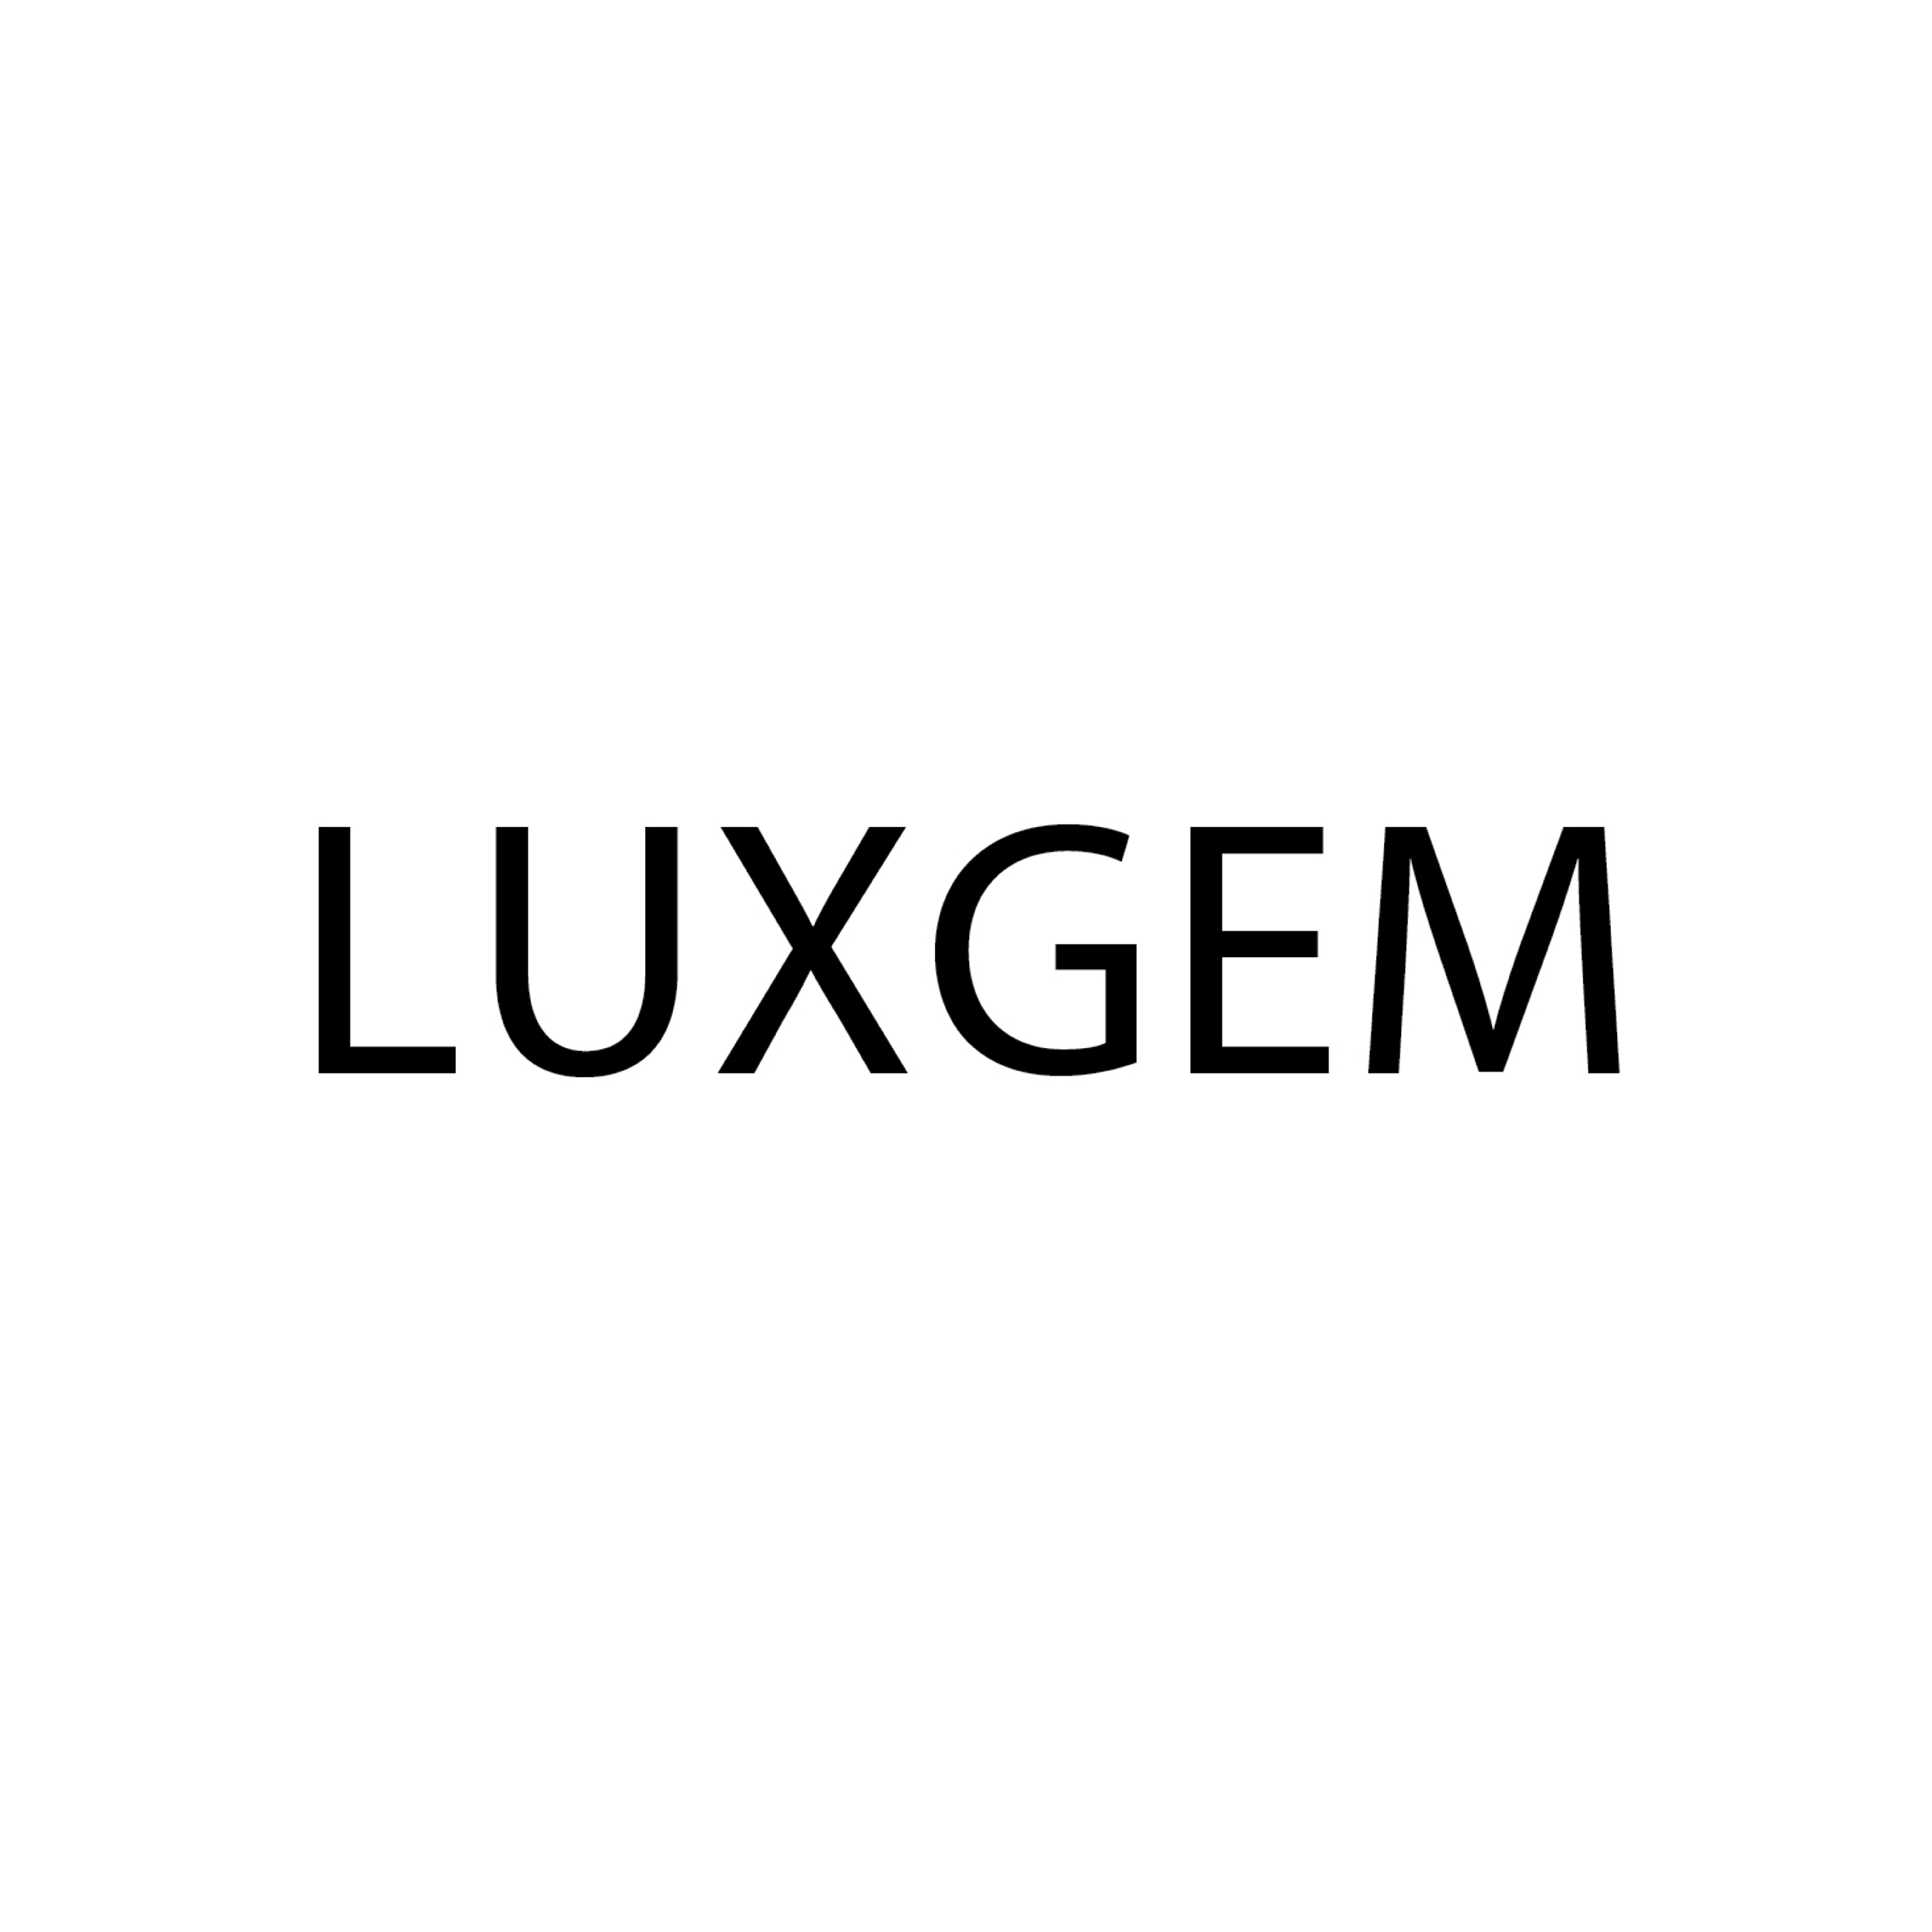 LUXGEM logo